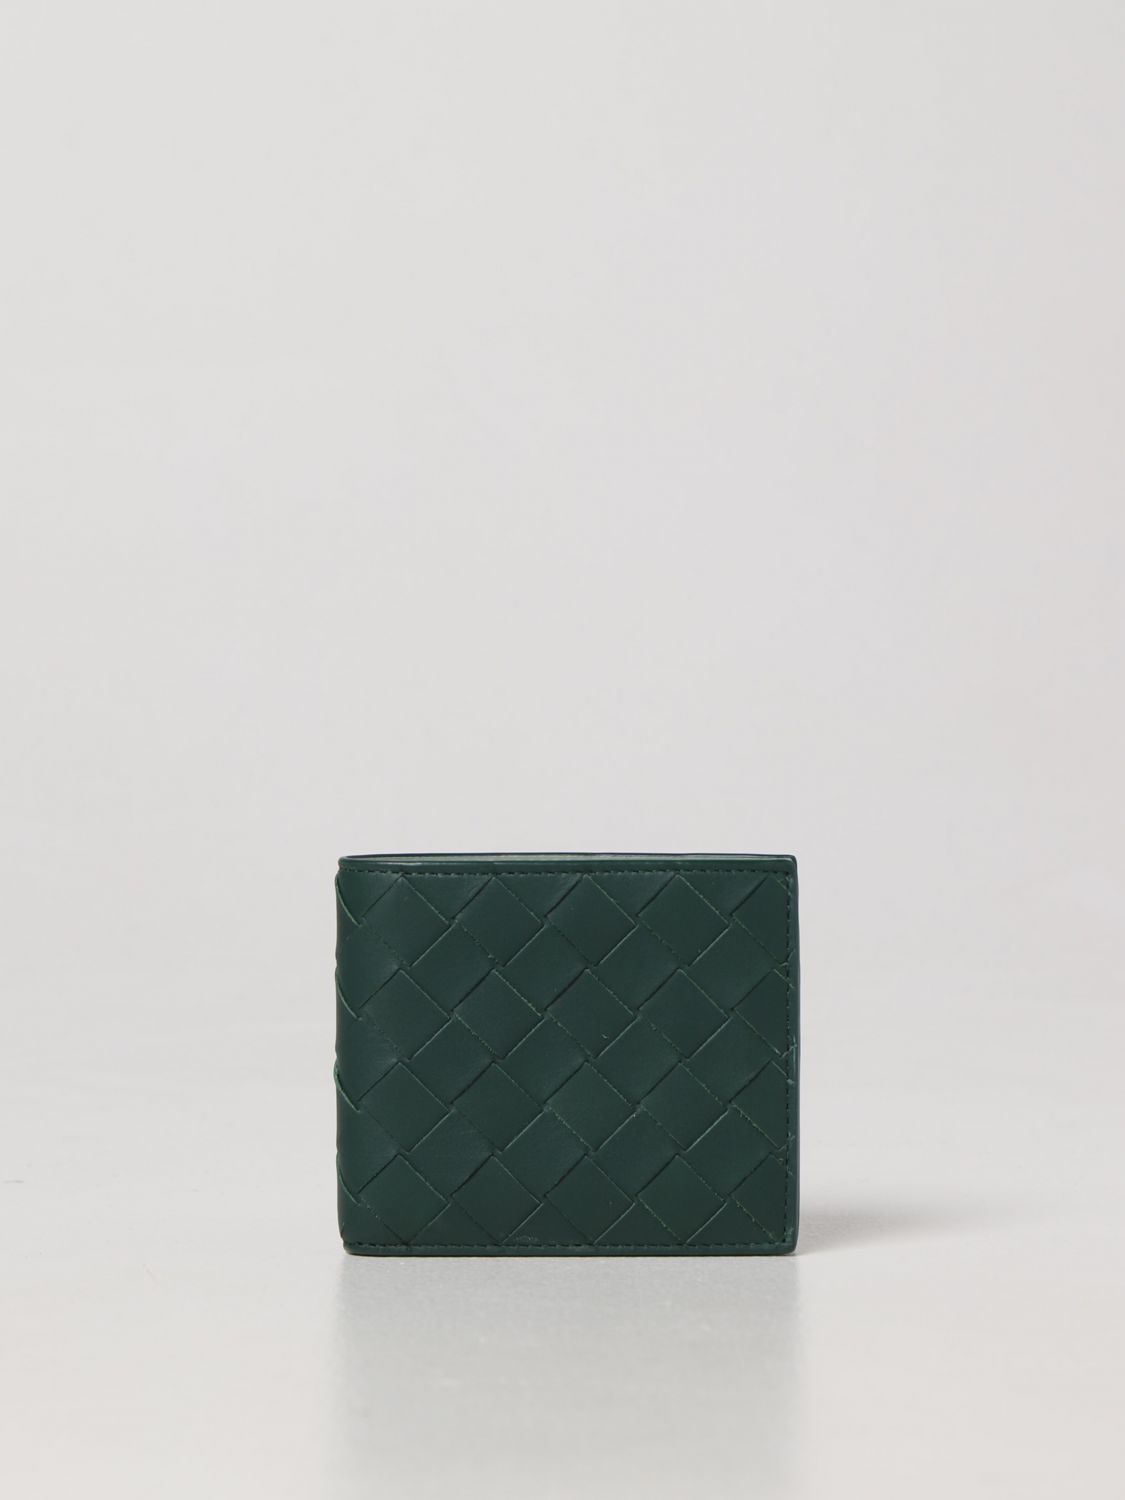 Bottega Veneta Outlet: wallet for man - Green | Bottega Veneta wallet ...